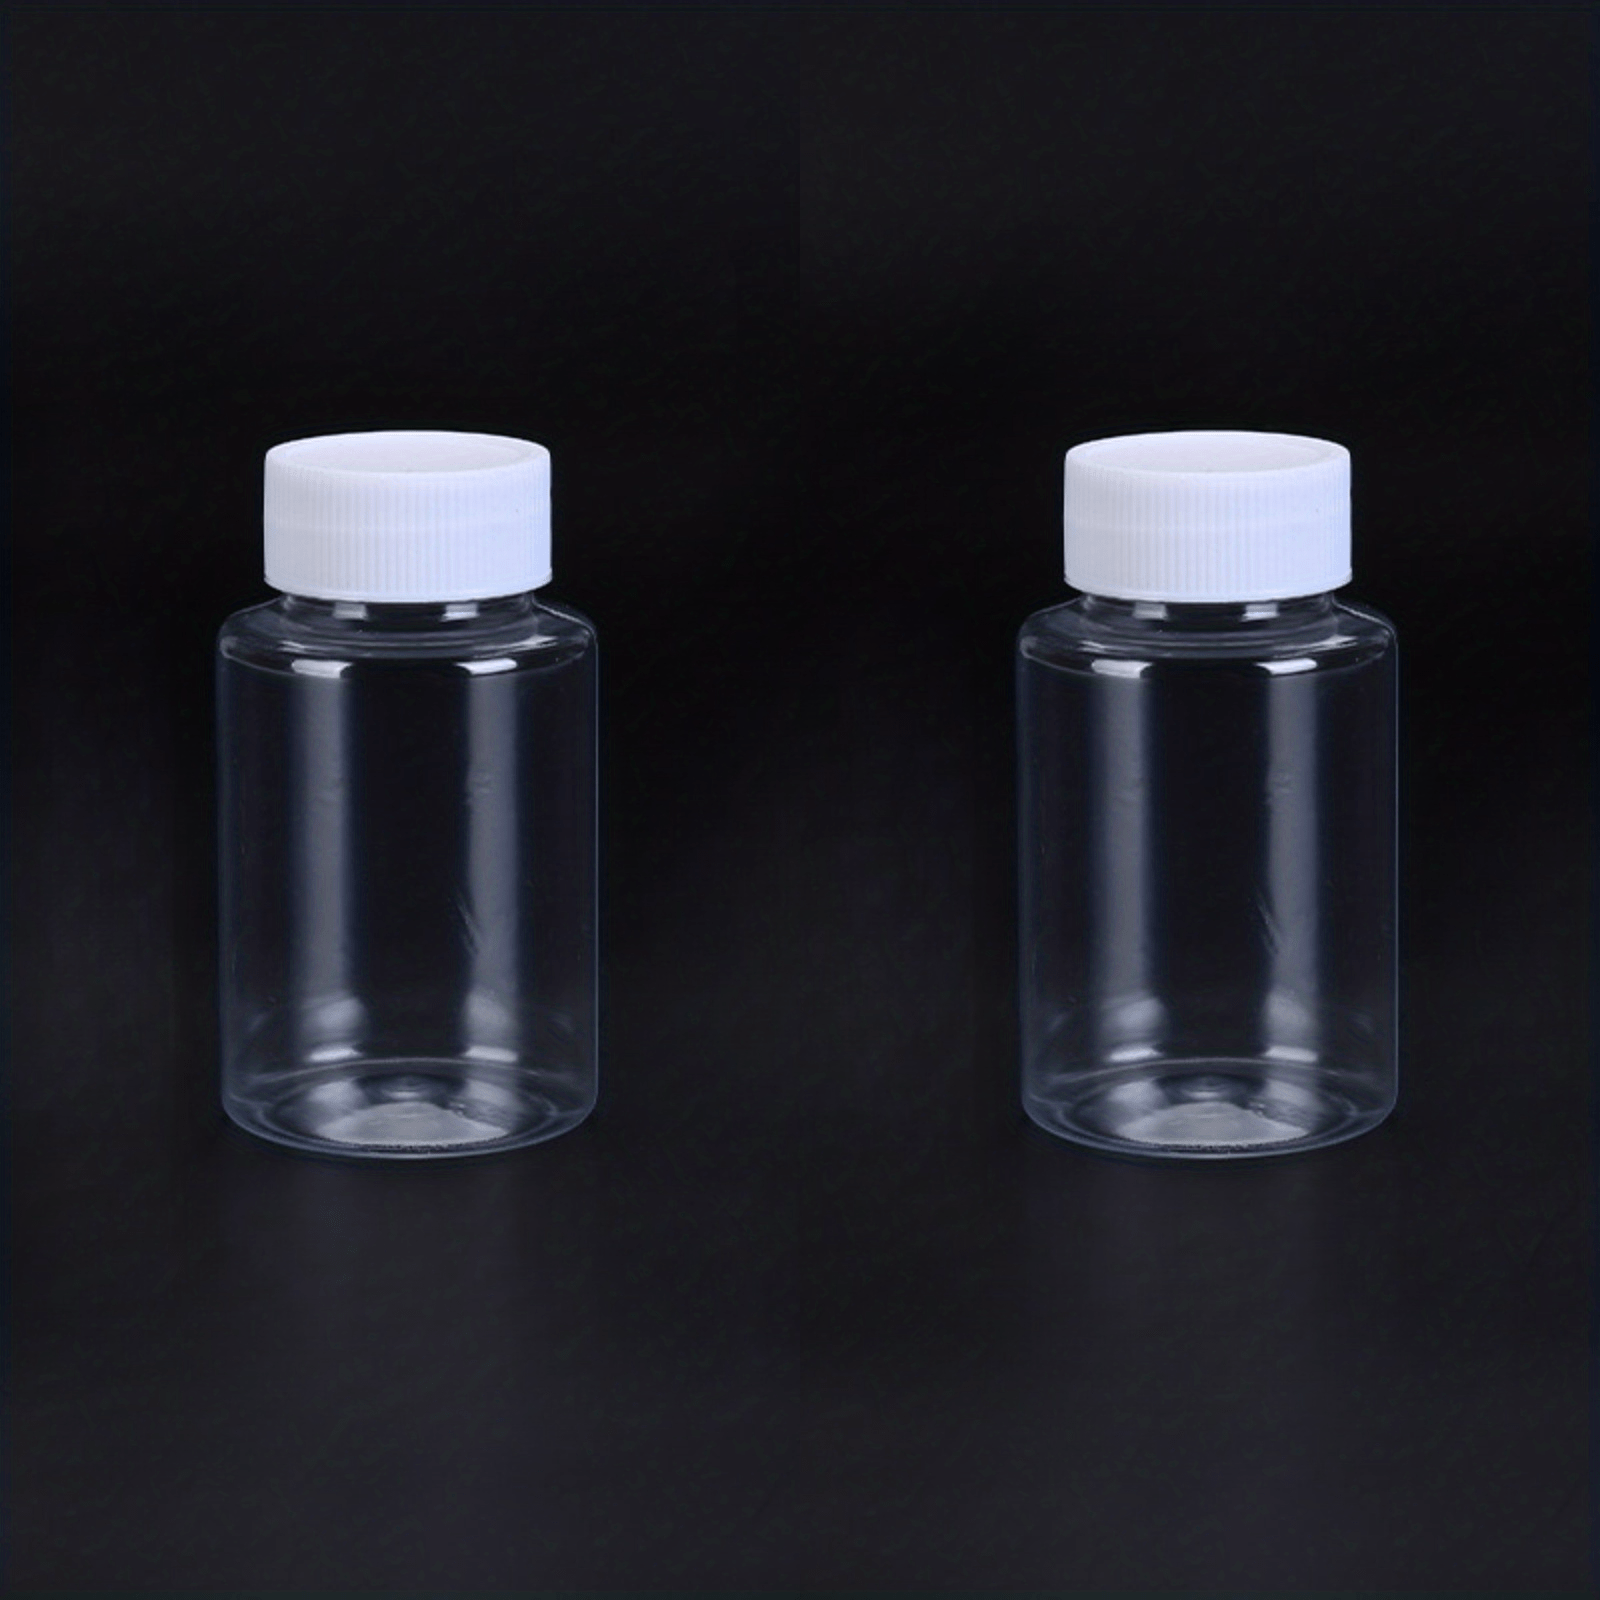 Sealable wide-necked bottles - Samplers, sampling equipment for